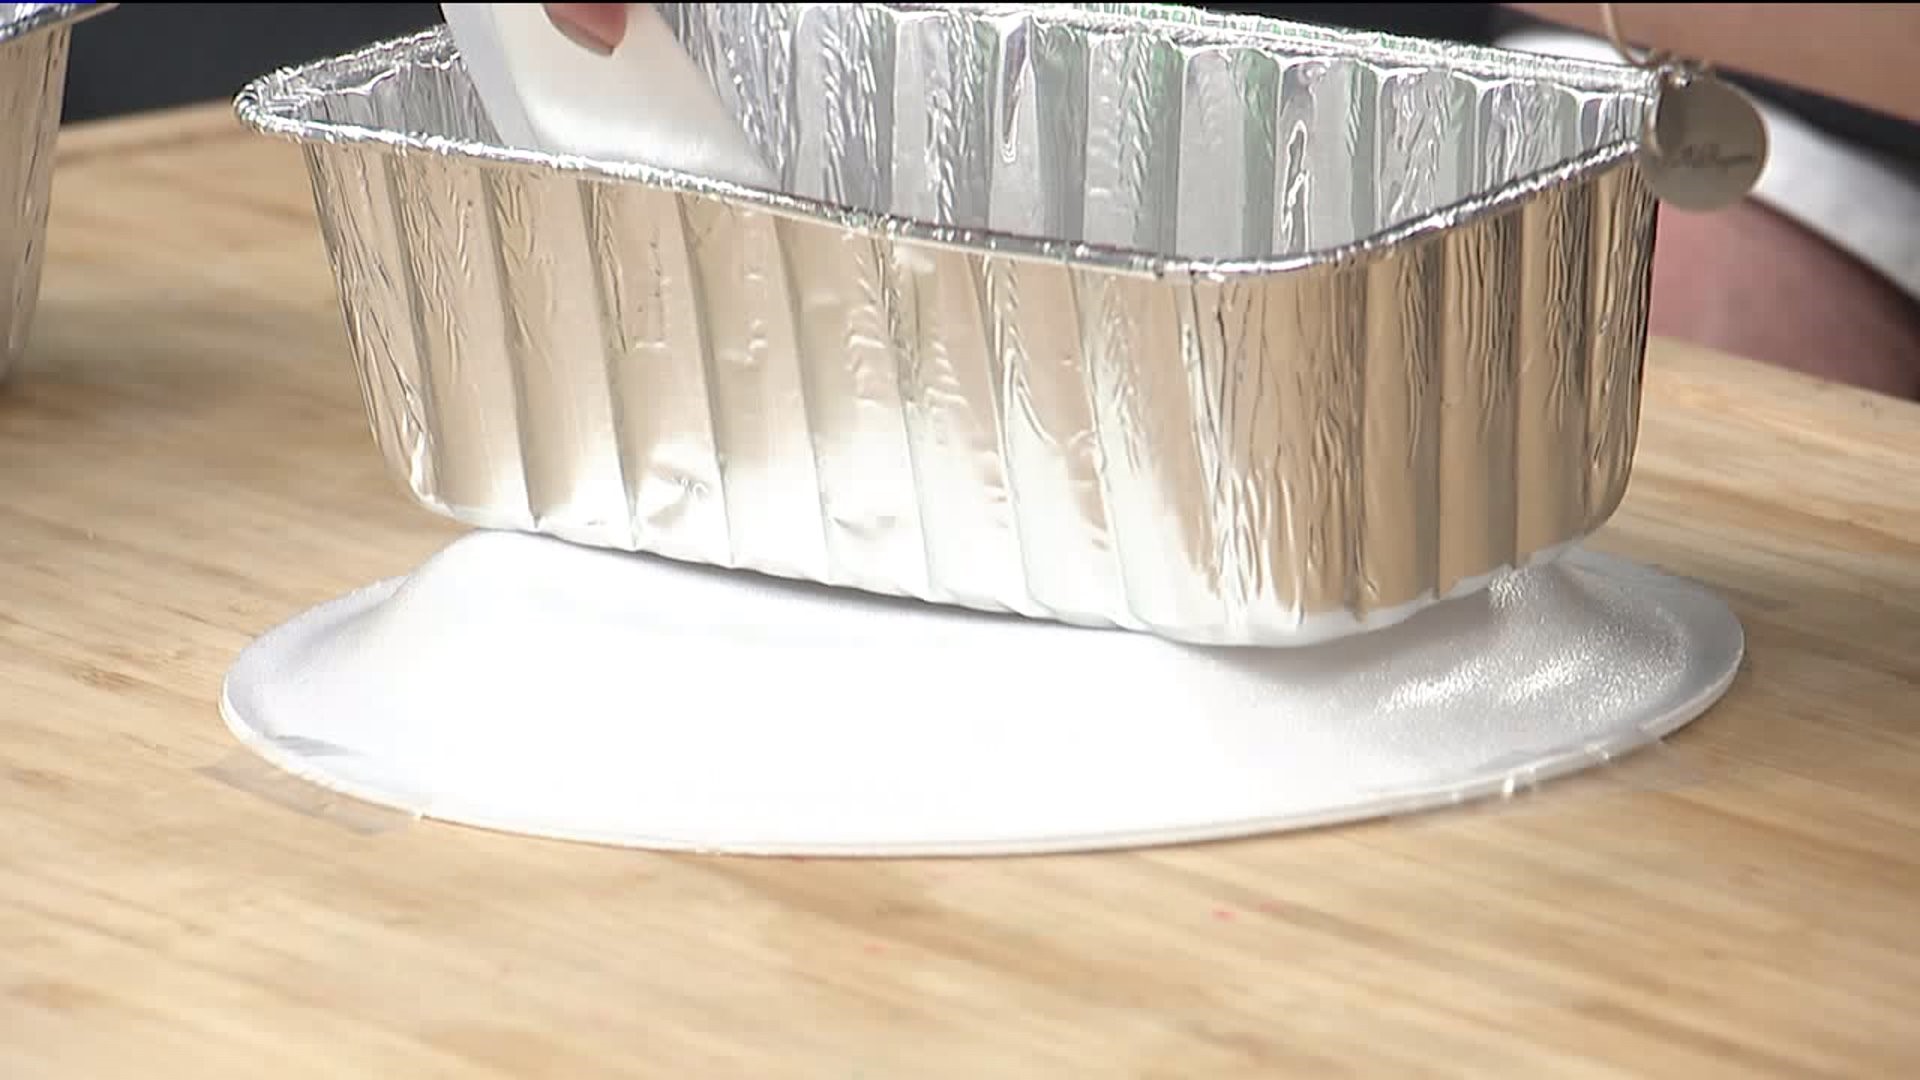 How Aluminum and Styrofoam Can Make Indoor Lightning